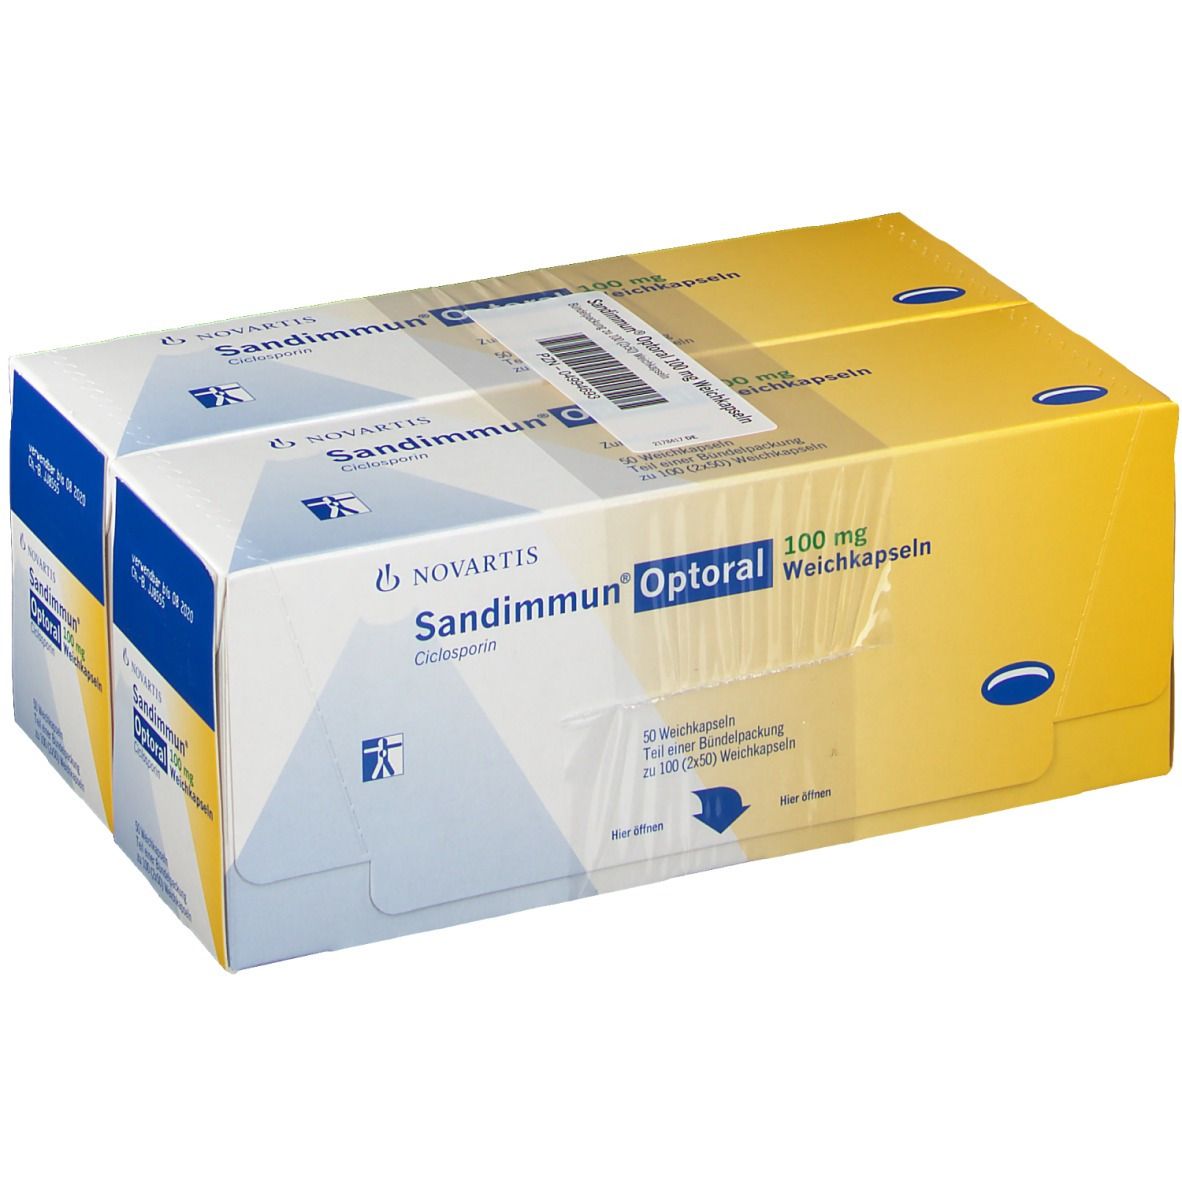 Sandimmun® Optoral 100 mg